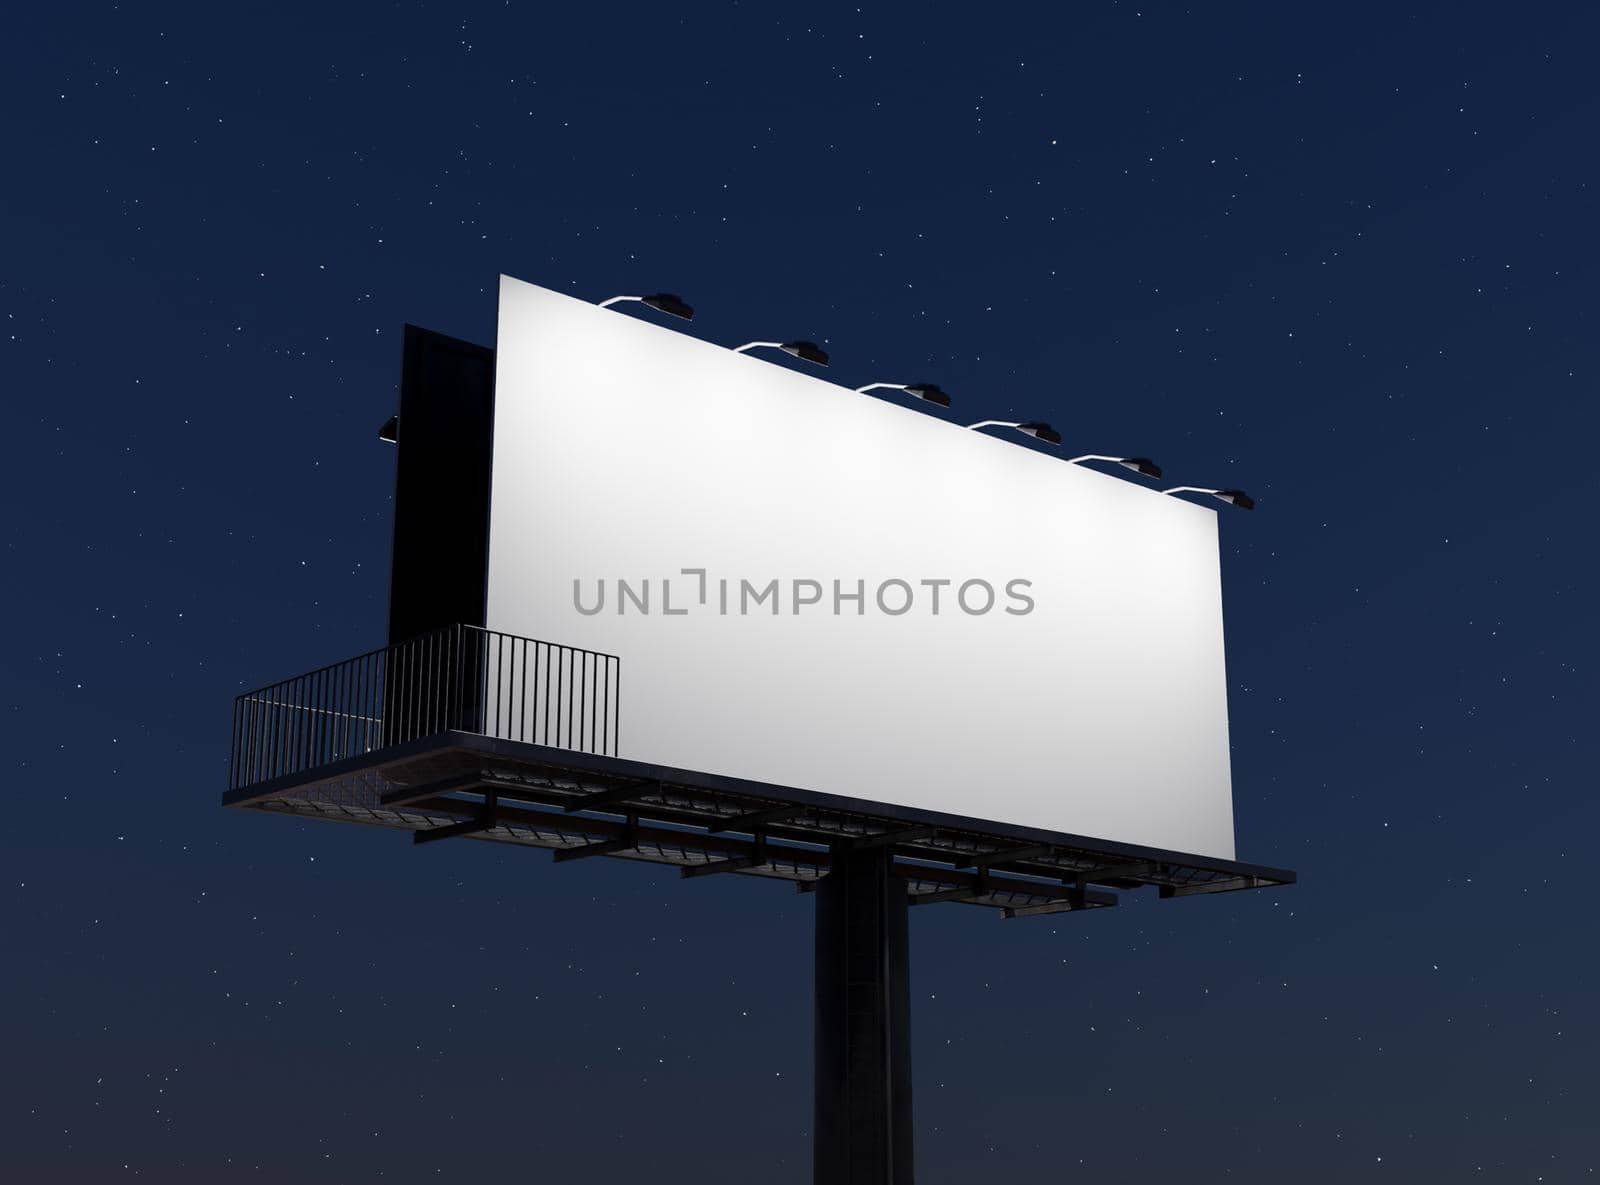 street billboard illuminated with spotlights at night by asolano